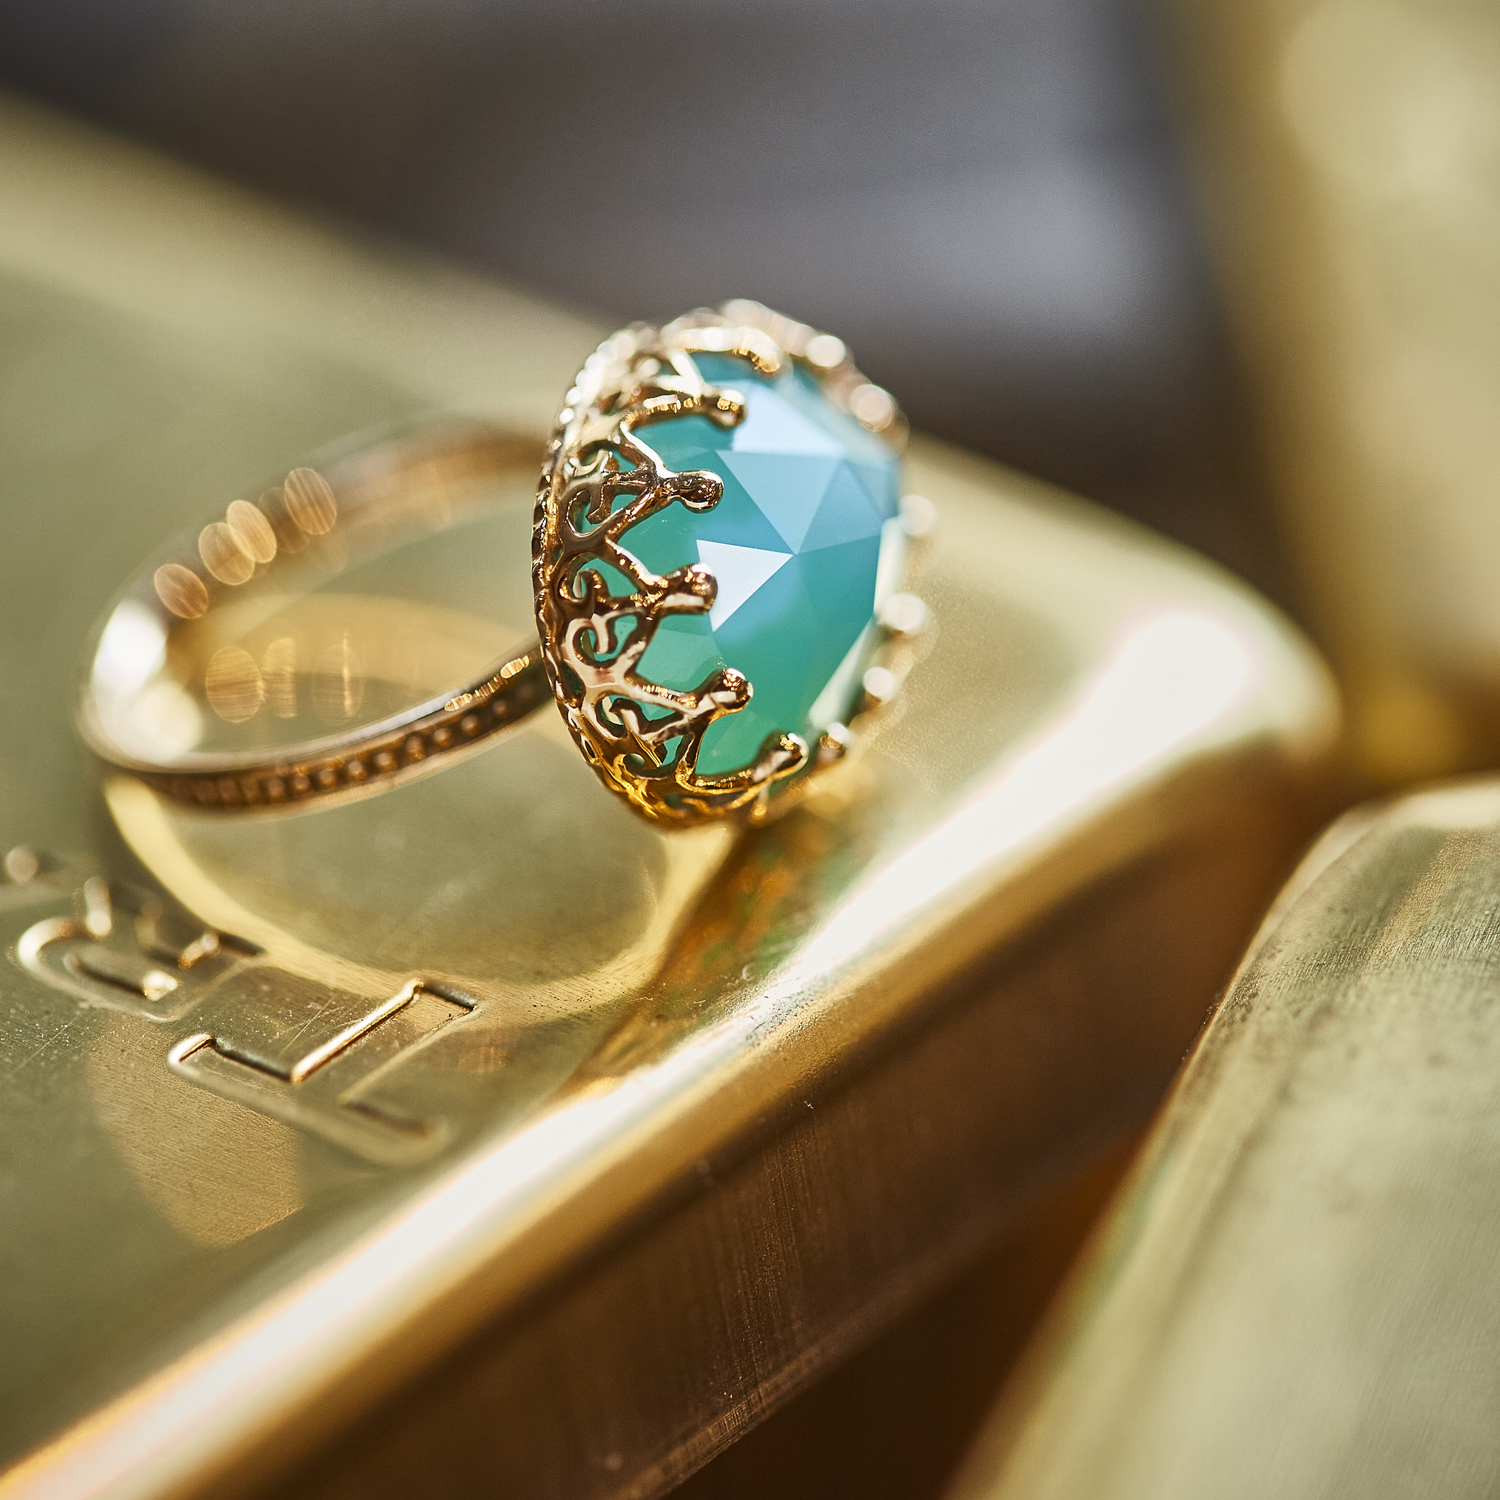 Jewel Ring Sea Blue Chalcedony/1508-021